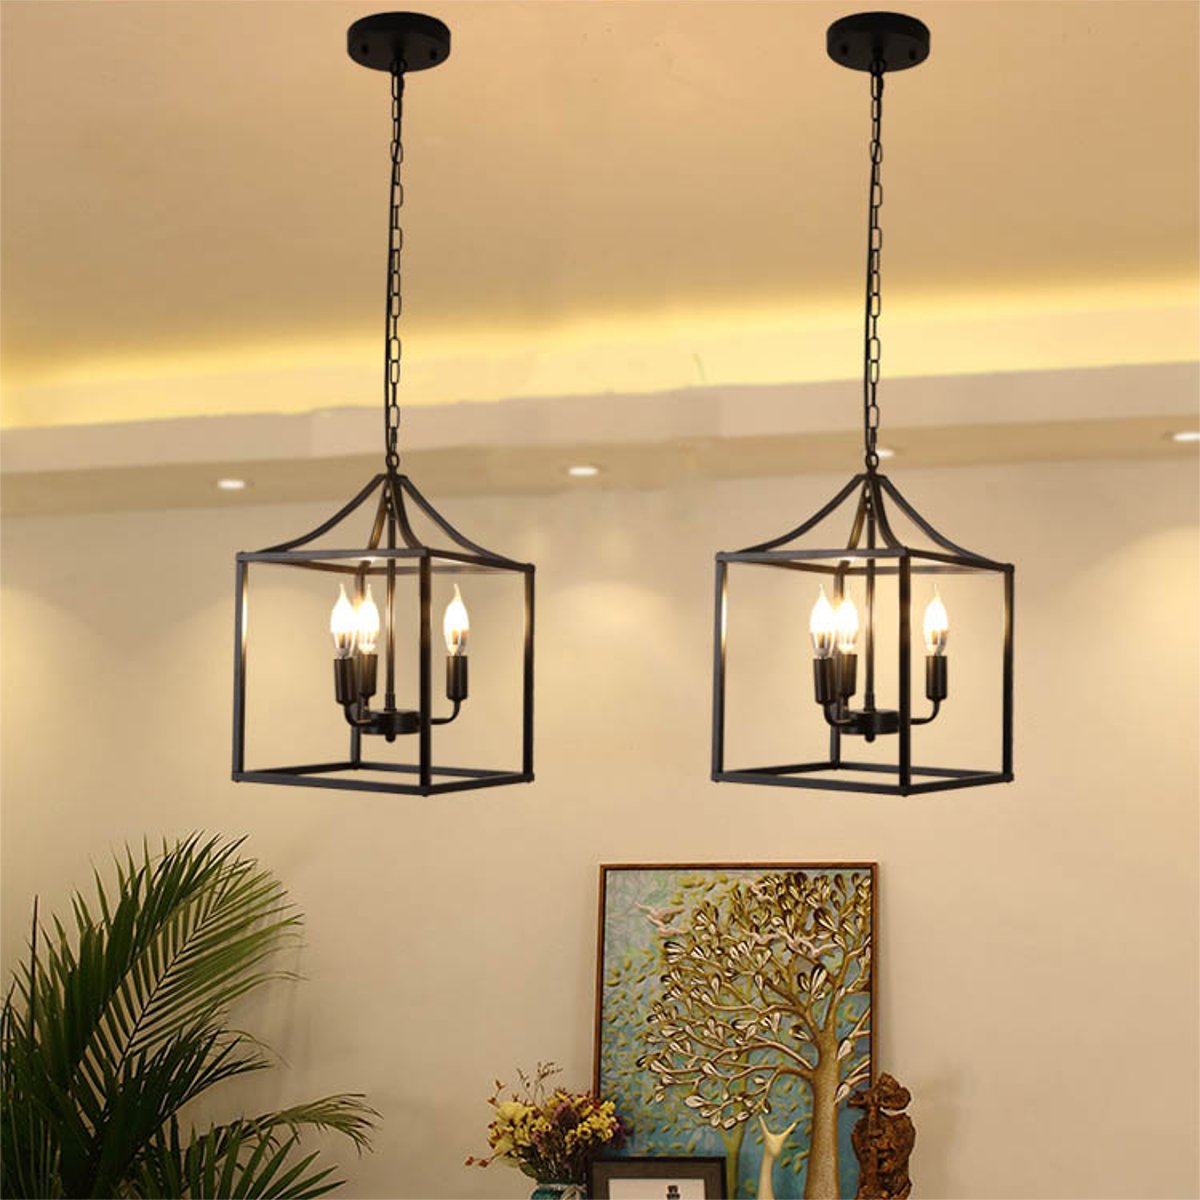 3-Heads-E12-Pendant-Light-Ceiling-Lamp-Hallway-Bedroom-Home-Bar-Fixture-Decor-1794840-2